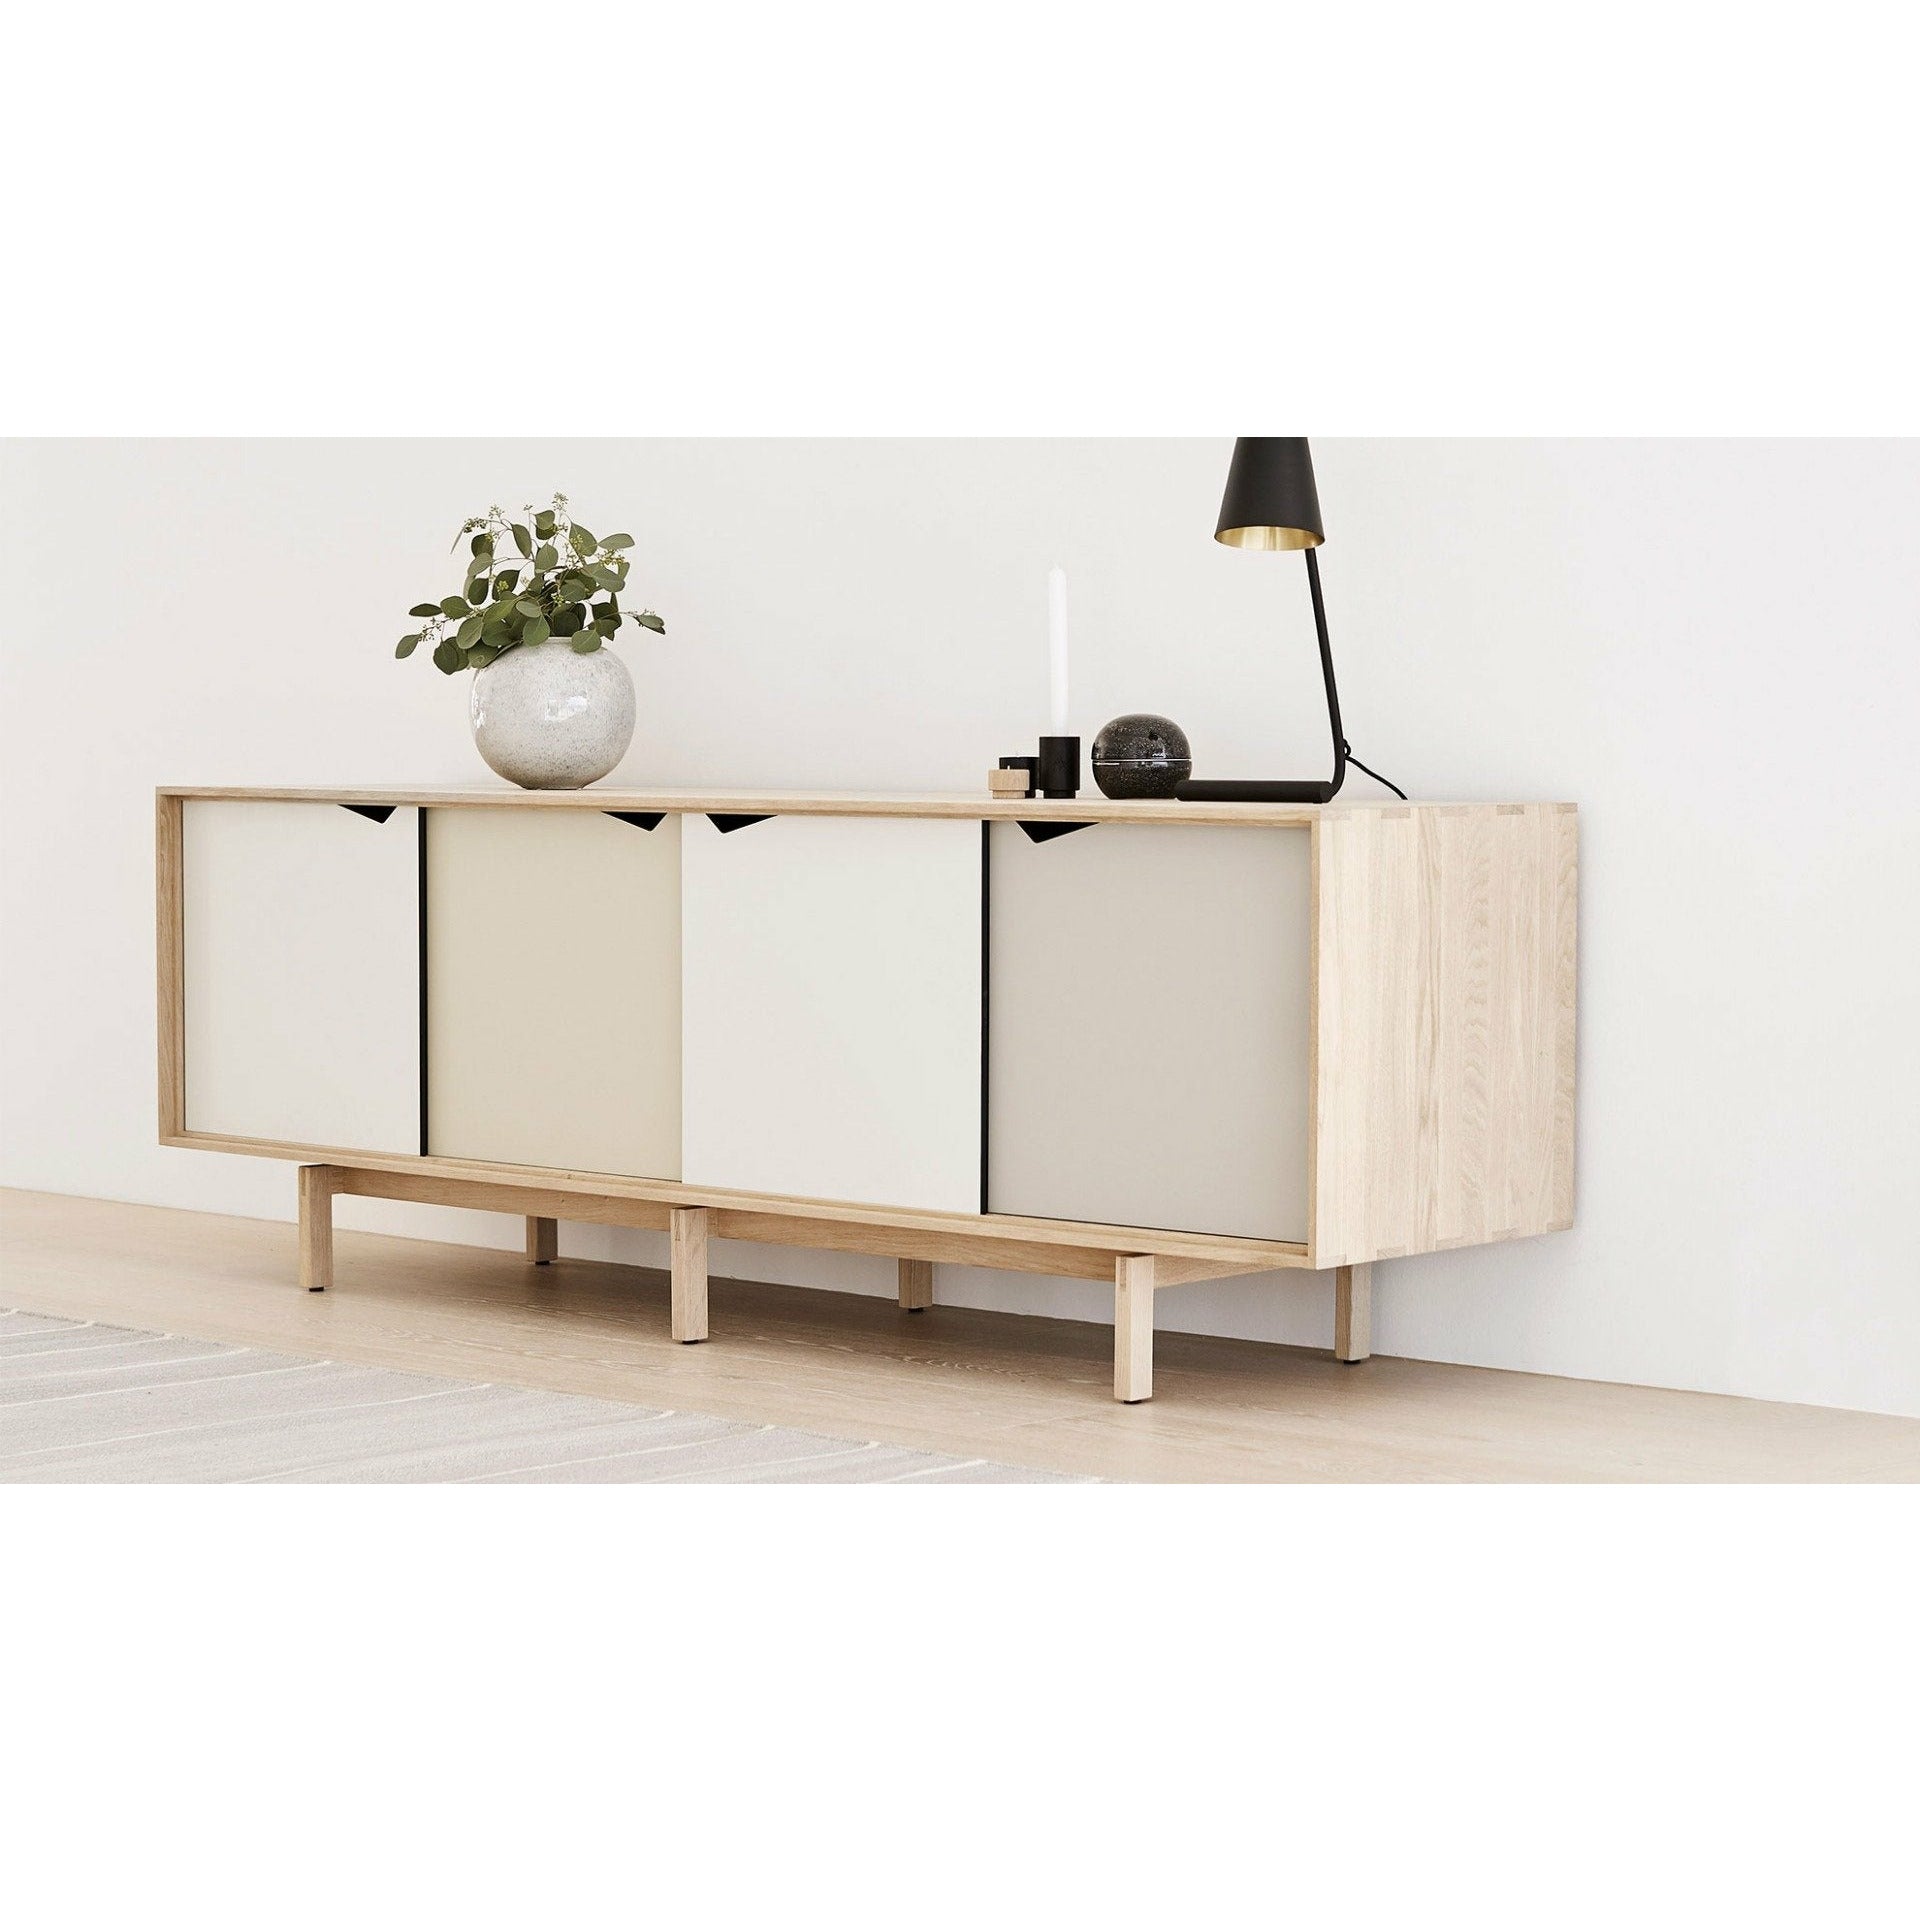 Annersen Furniture S1 Batboard Socled Oak, tiroirs multicolores, 200 cm